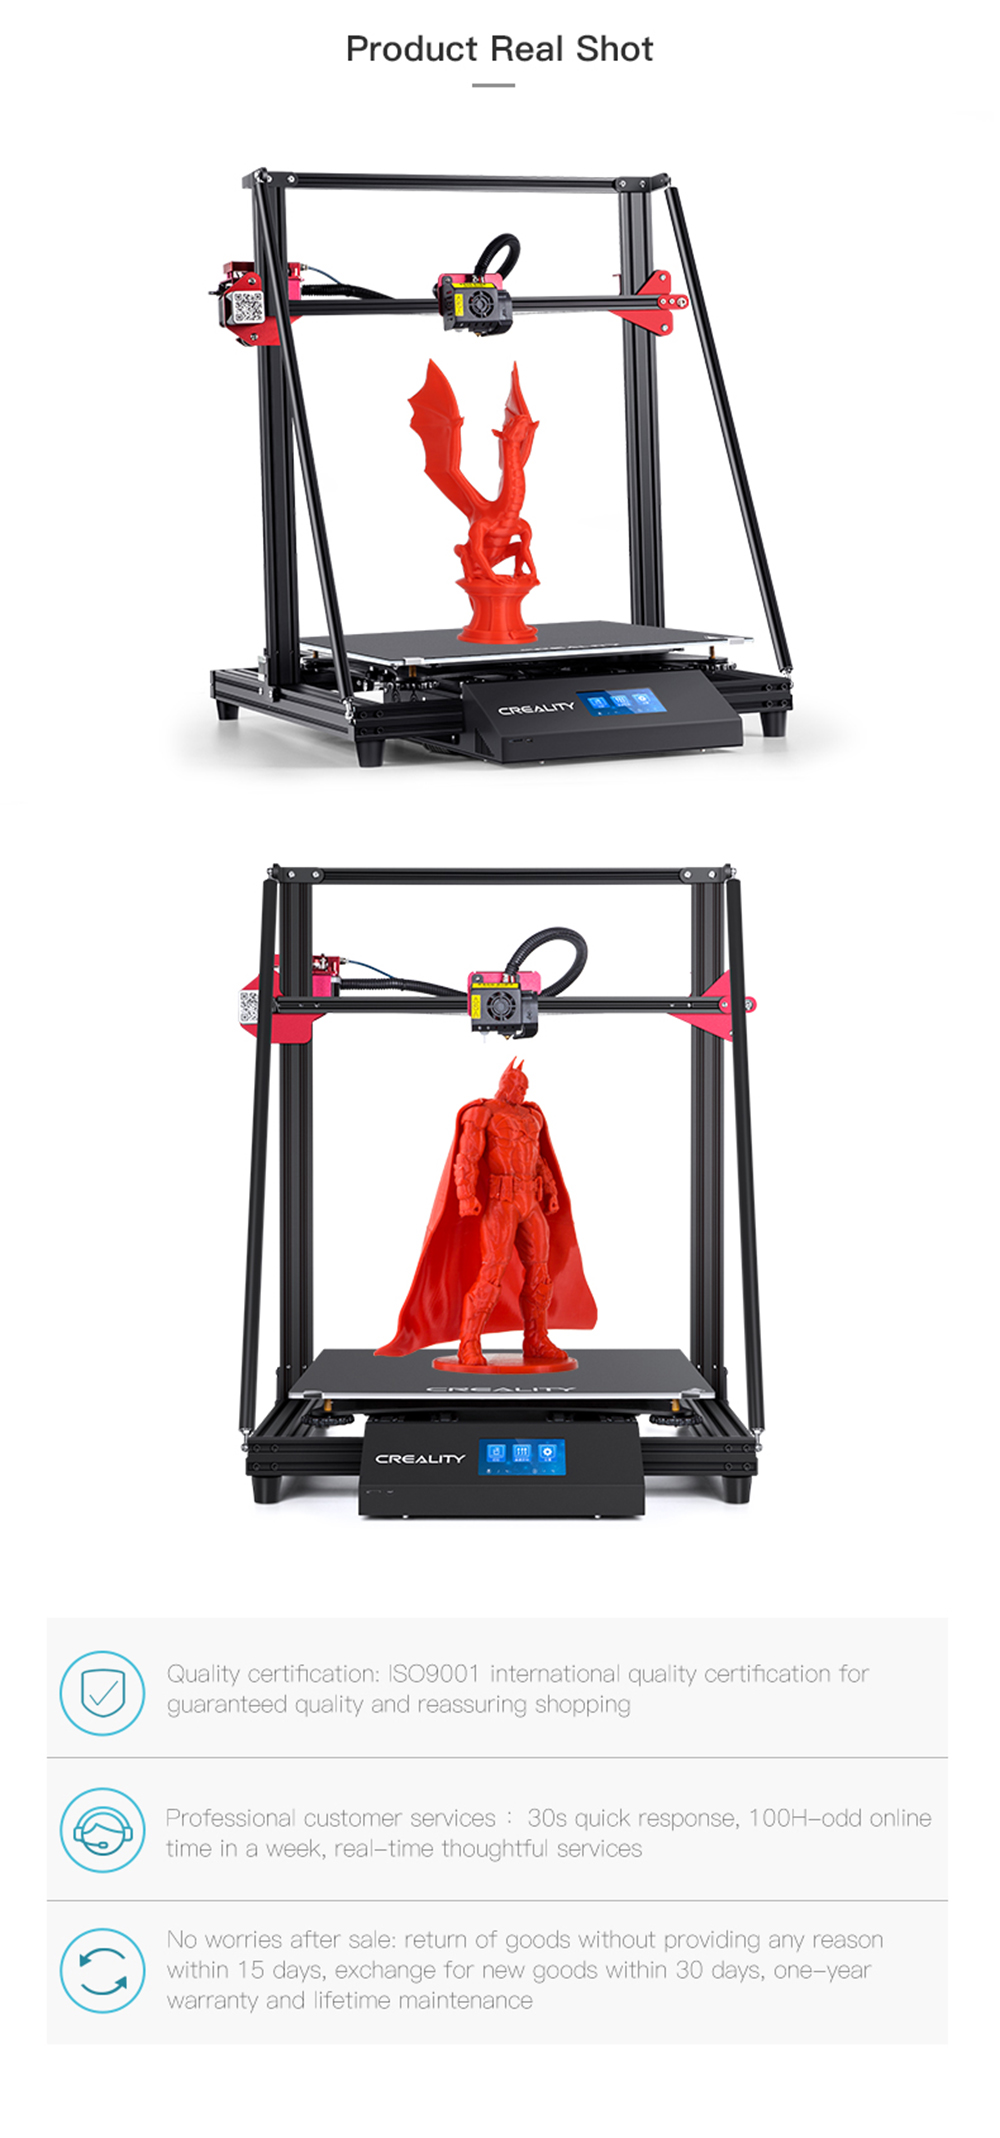 Creality3D CR-10 Max 3D-Drucker Bausatz - 450x450x470mm - Verschiedene Druckeransichten mit 3D-gedruckten Bauteilen